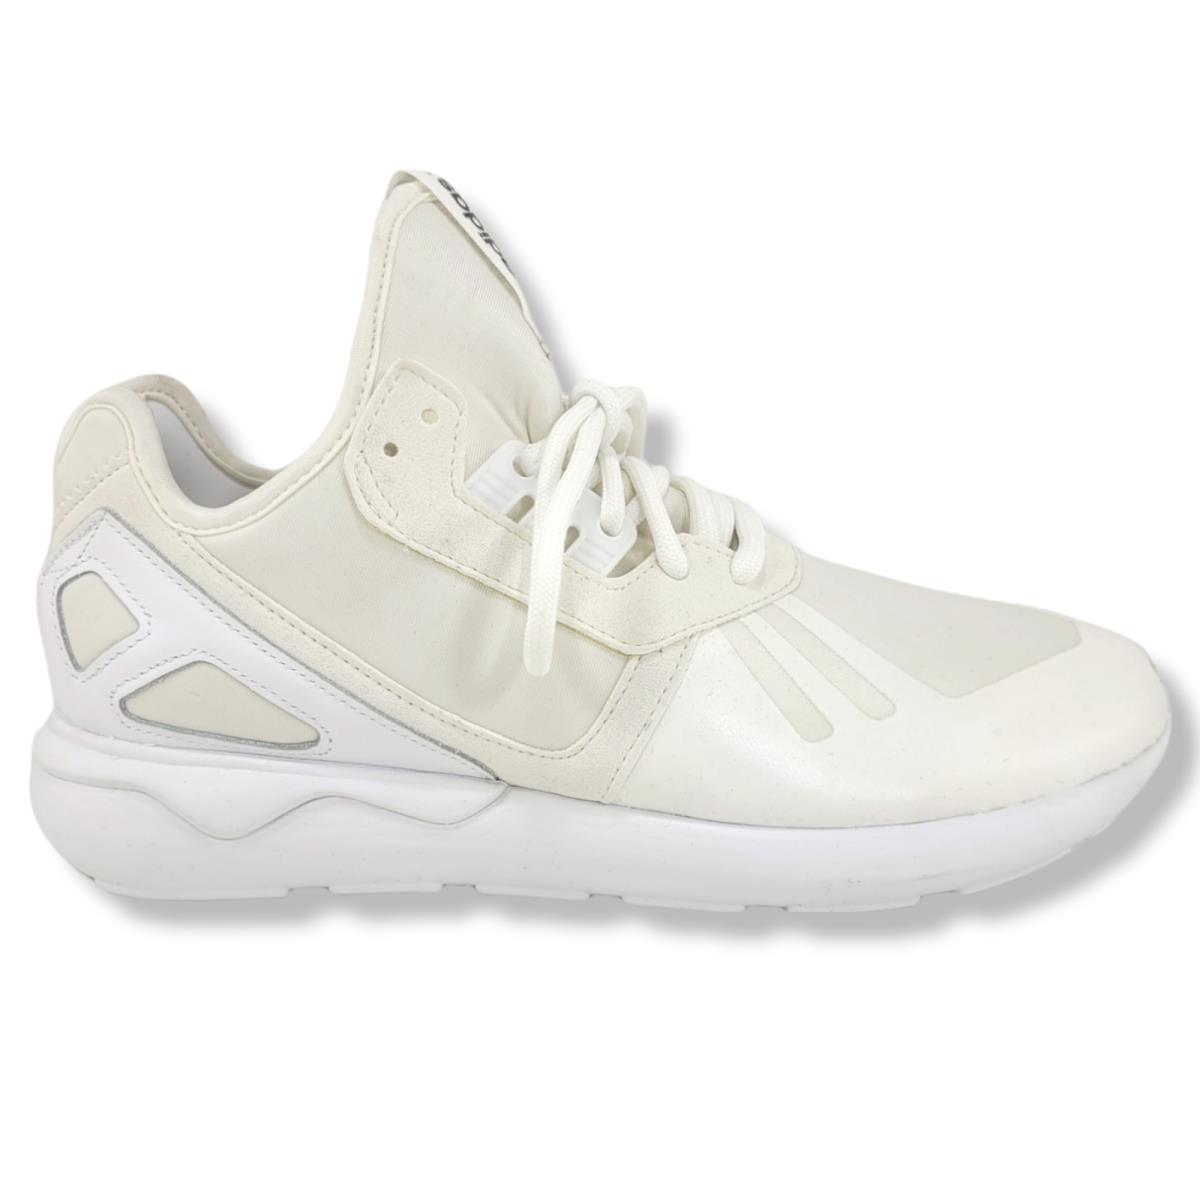 Adidas Originals Tubular Runner S83141 Mens Shoes Leather White Sport SZ 11 - White , White Manufacturer